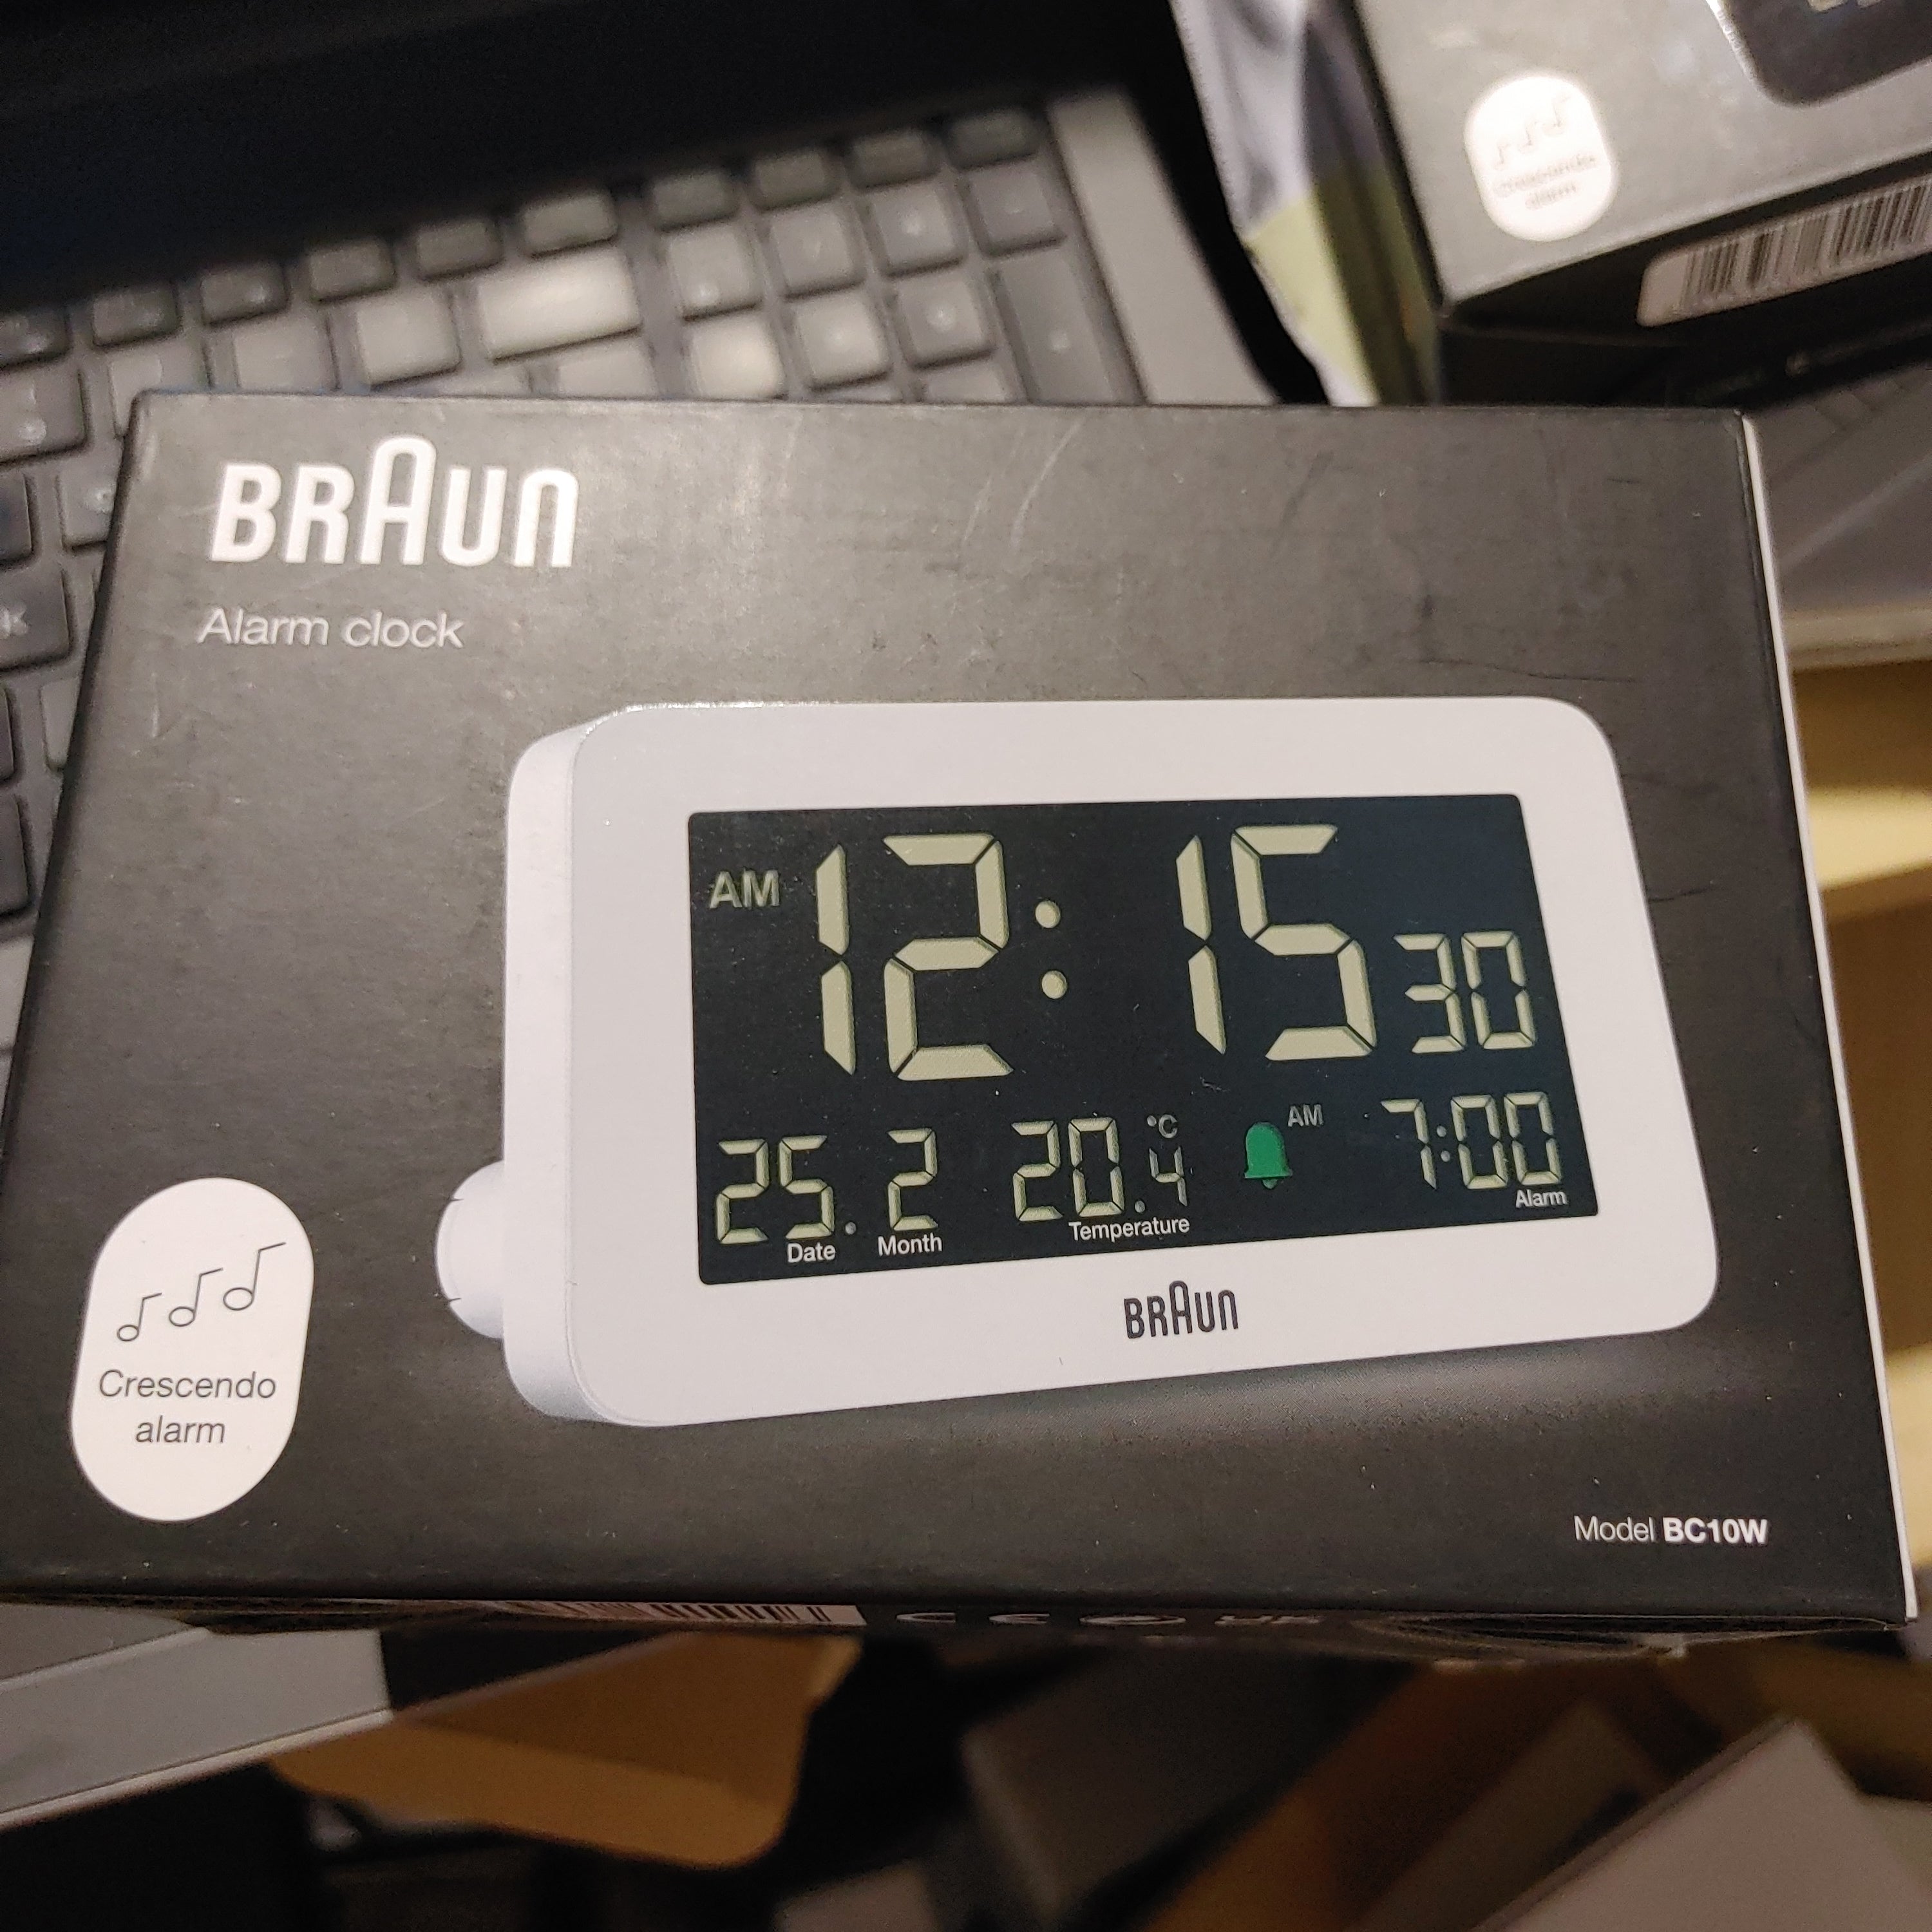 BC10W Braun Digital Alarm Clock - White